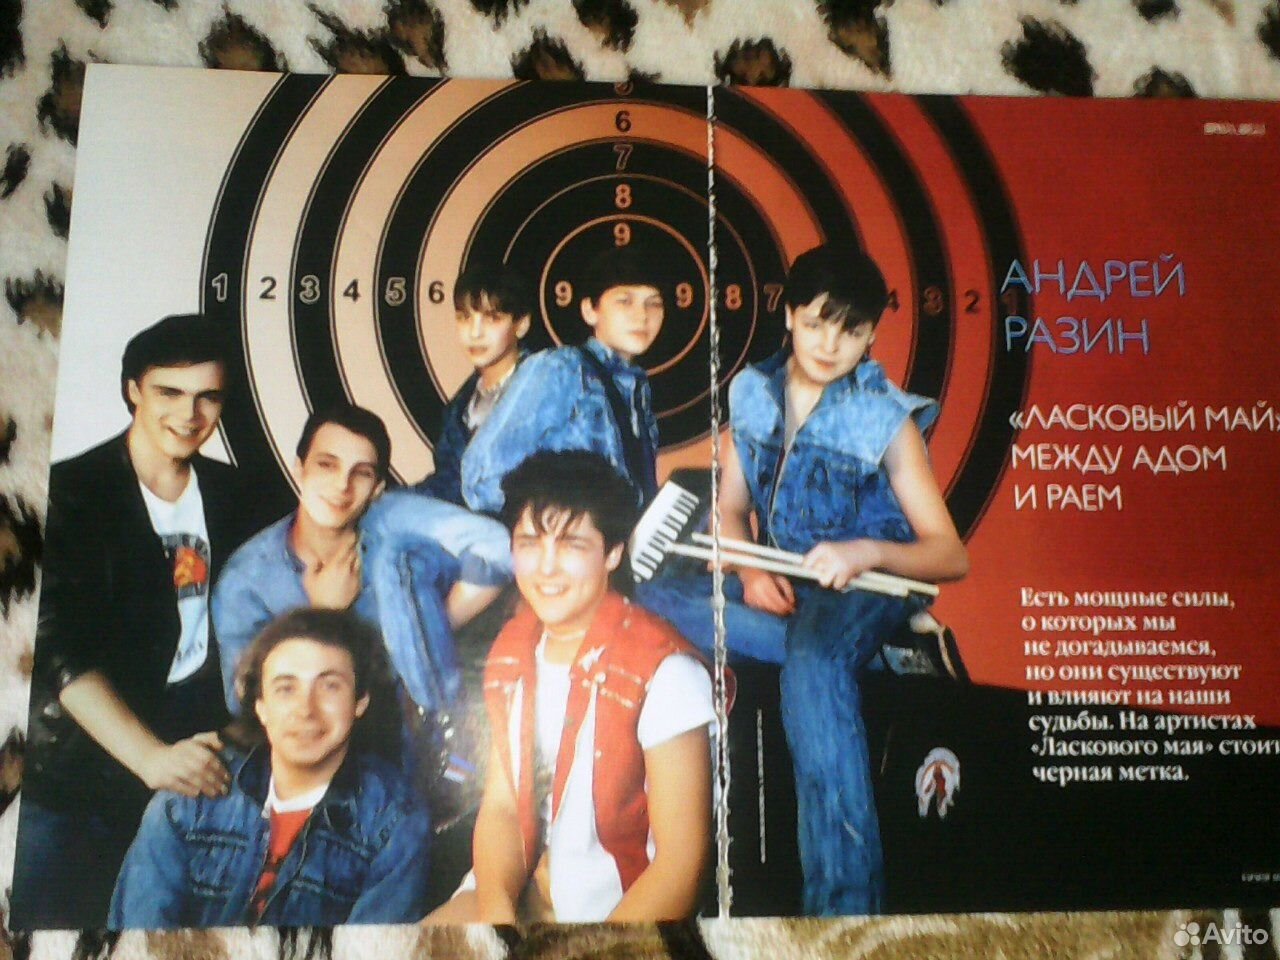 Ласковый май песня какой год. Группа ласковый май Постер. Ласковый май фото 1988. Ласковый май плакат.